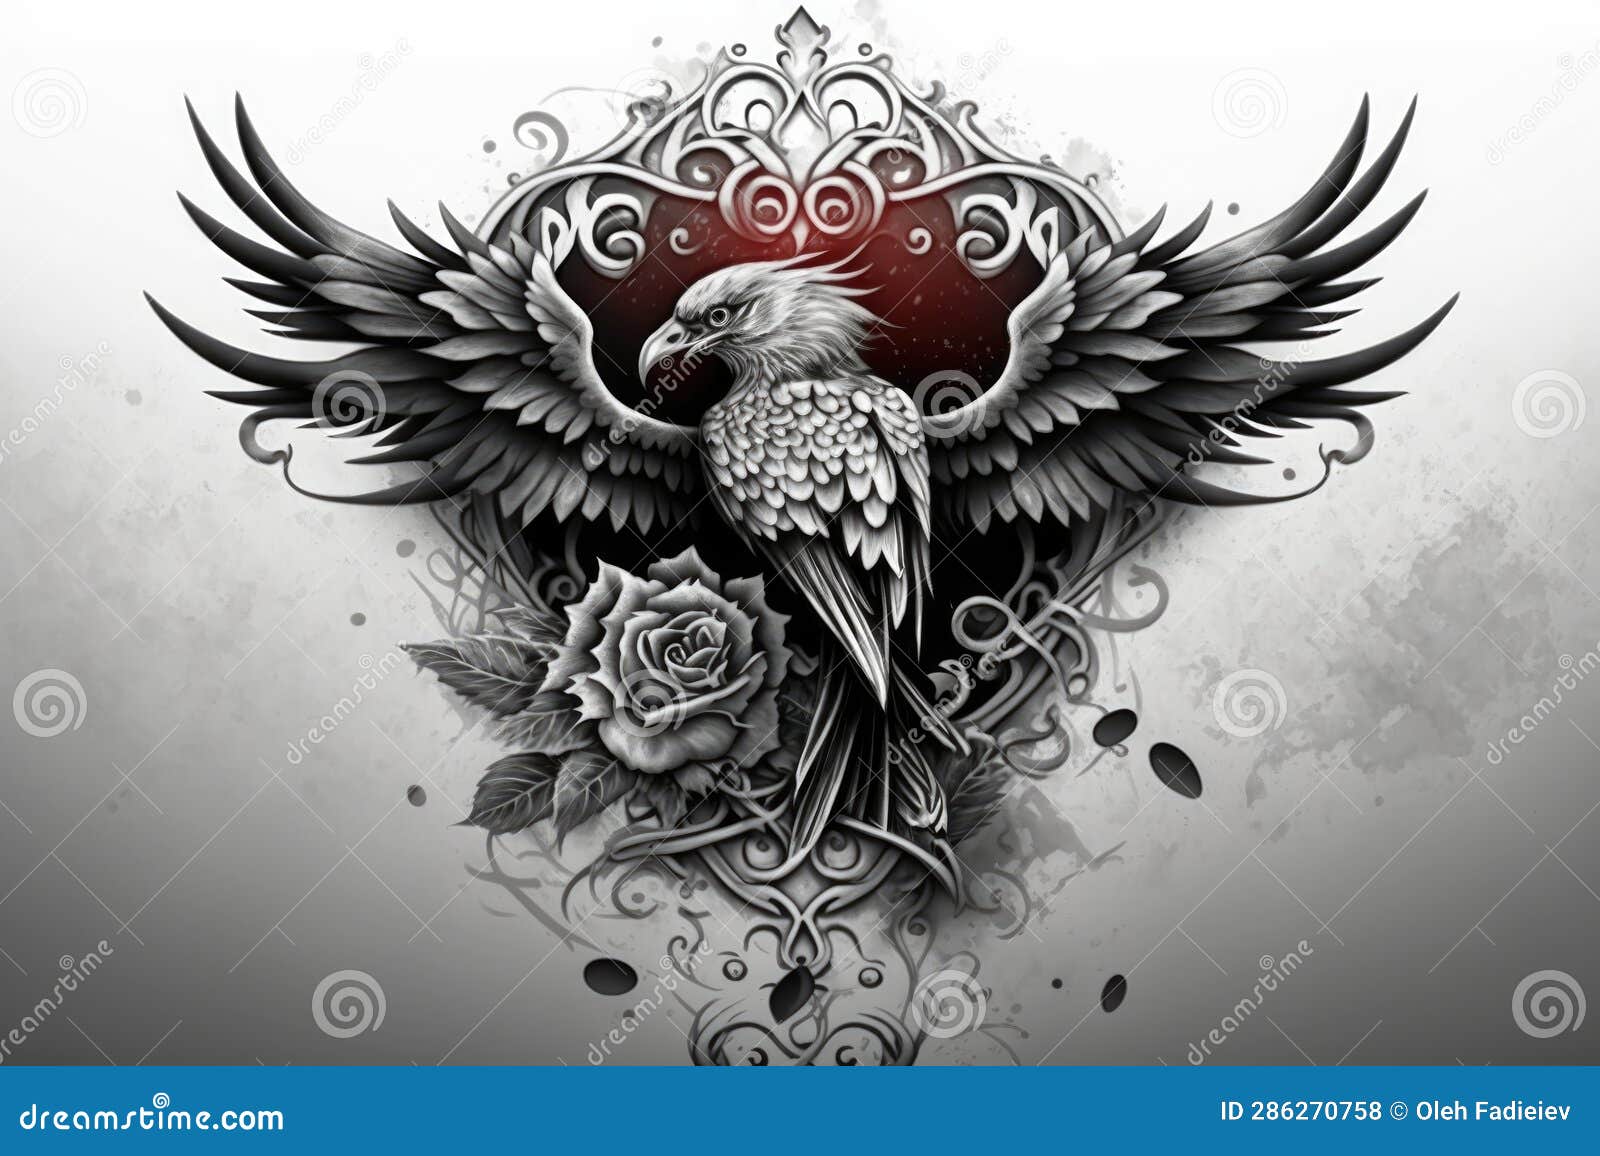 Premium Vector | Eagle and sun old school tattoo illustration